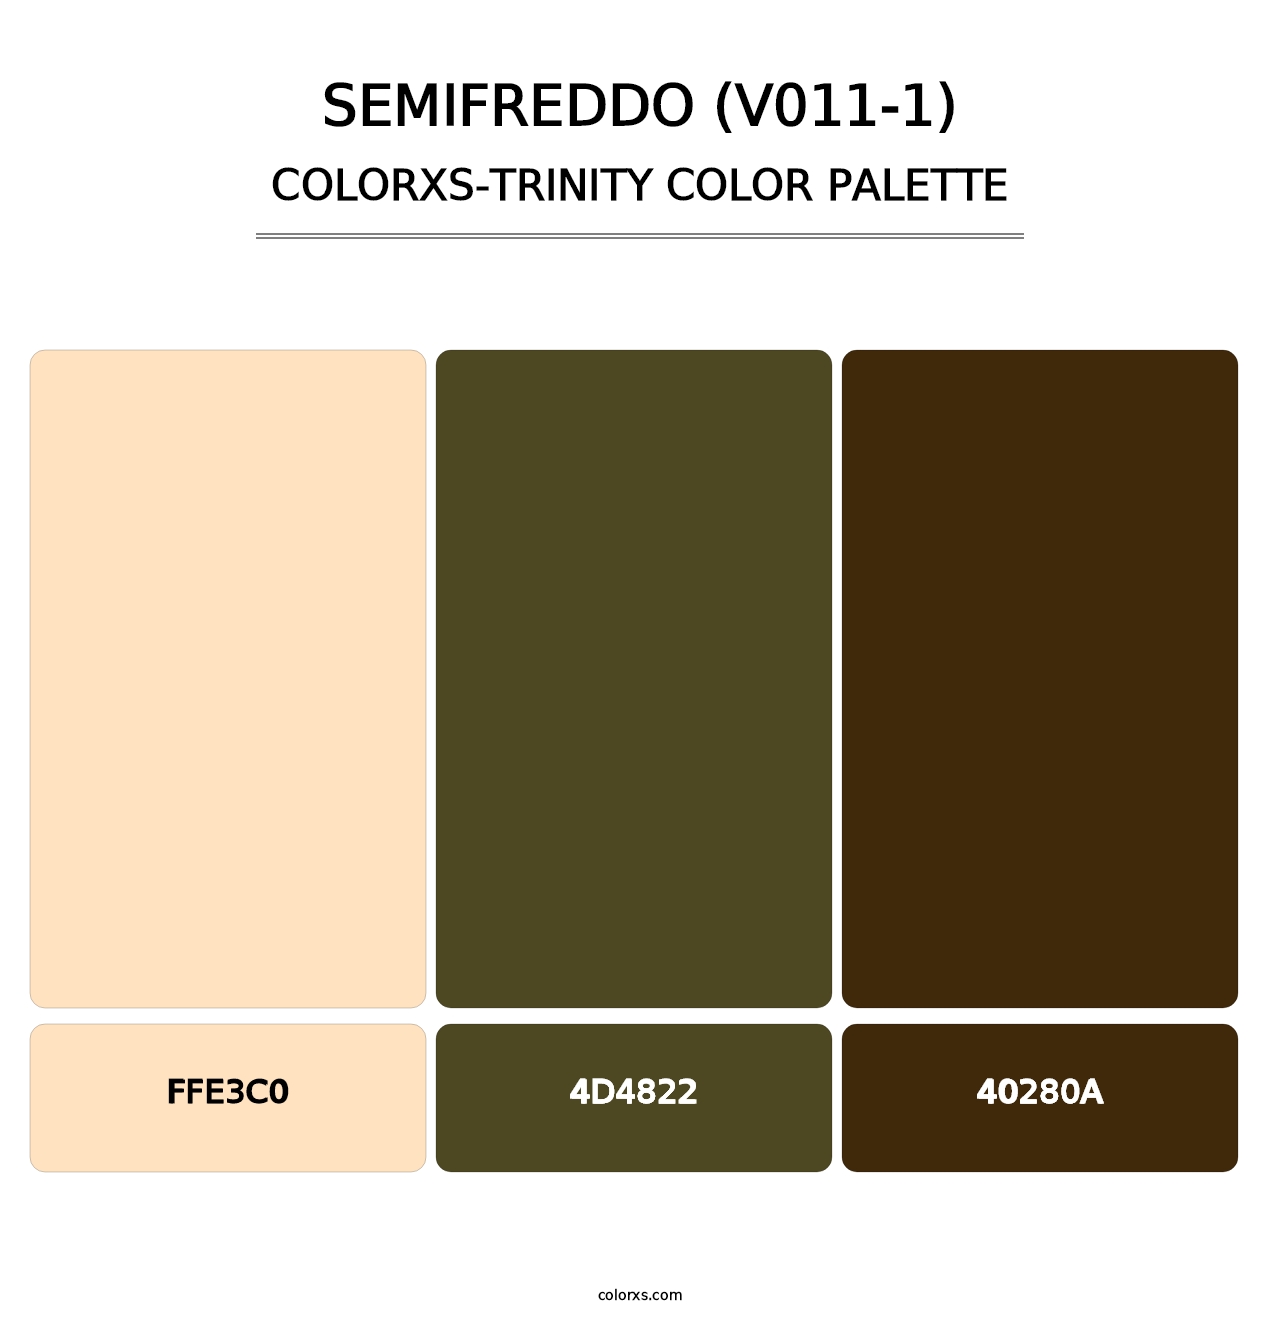 Semifreddo (V011-1) - Colorxs Trinity Palette